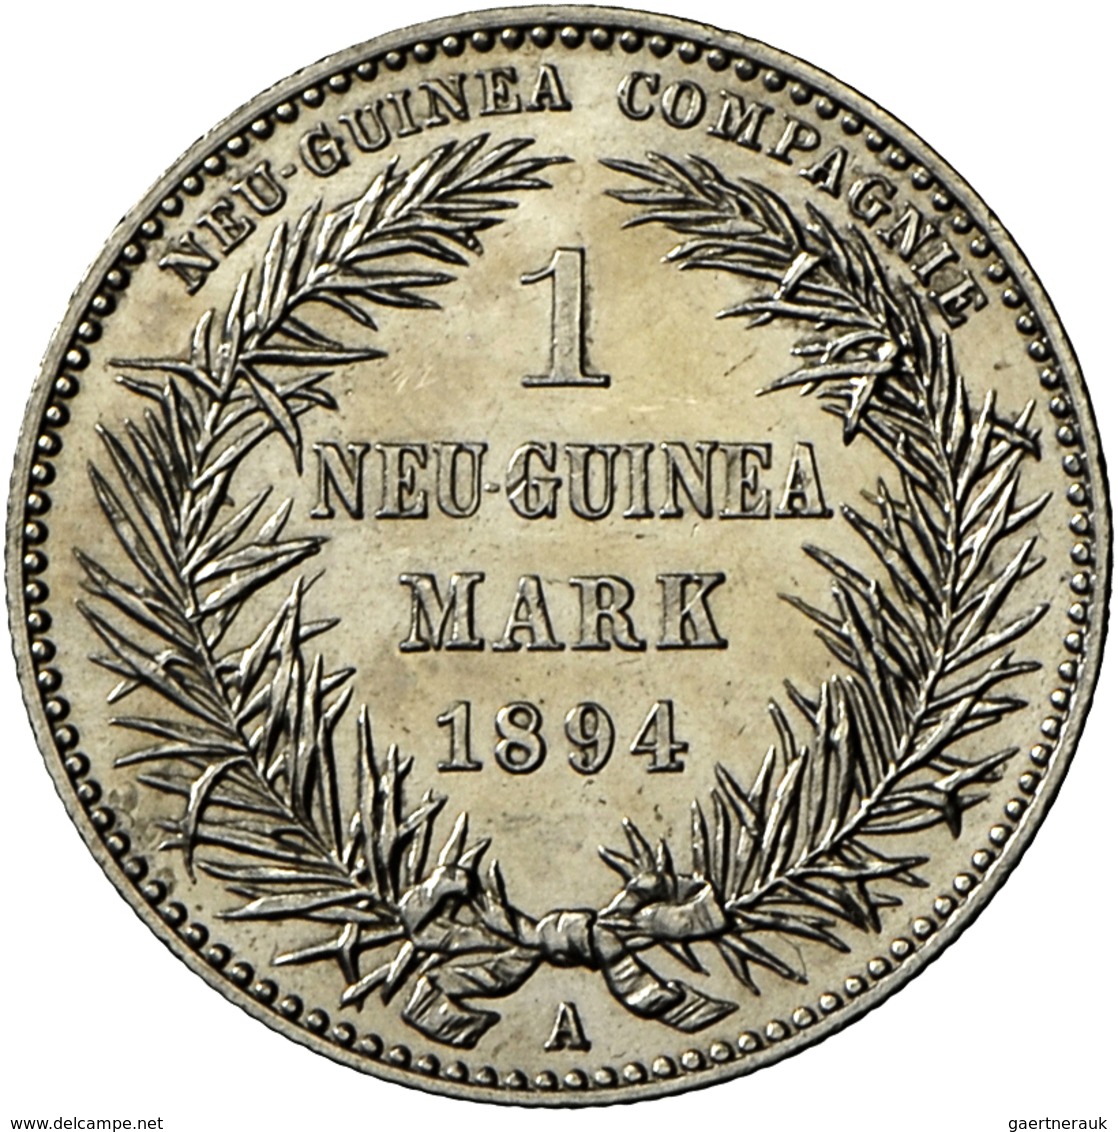 Deutsch-Neuguinea: 1 Mark 1894 A, Paradiesvogel, Jaeger 705, AKS 2018, No. 959, Vorzüglich/Stempelgl - Nouvelle Guinée Allemande